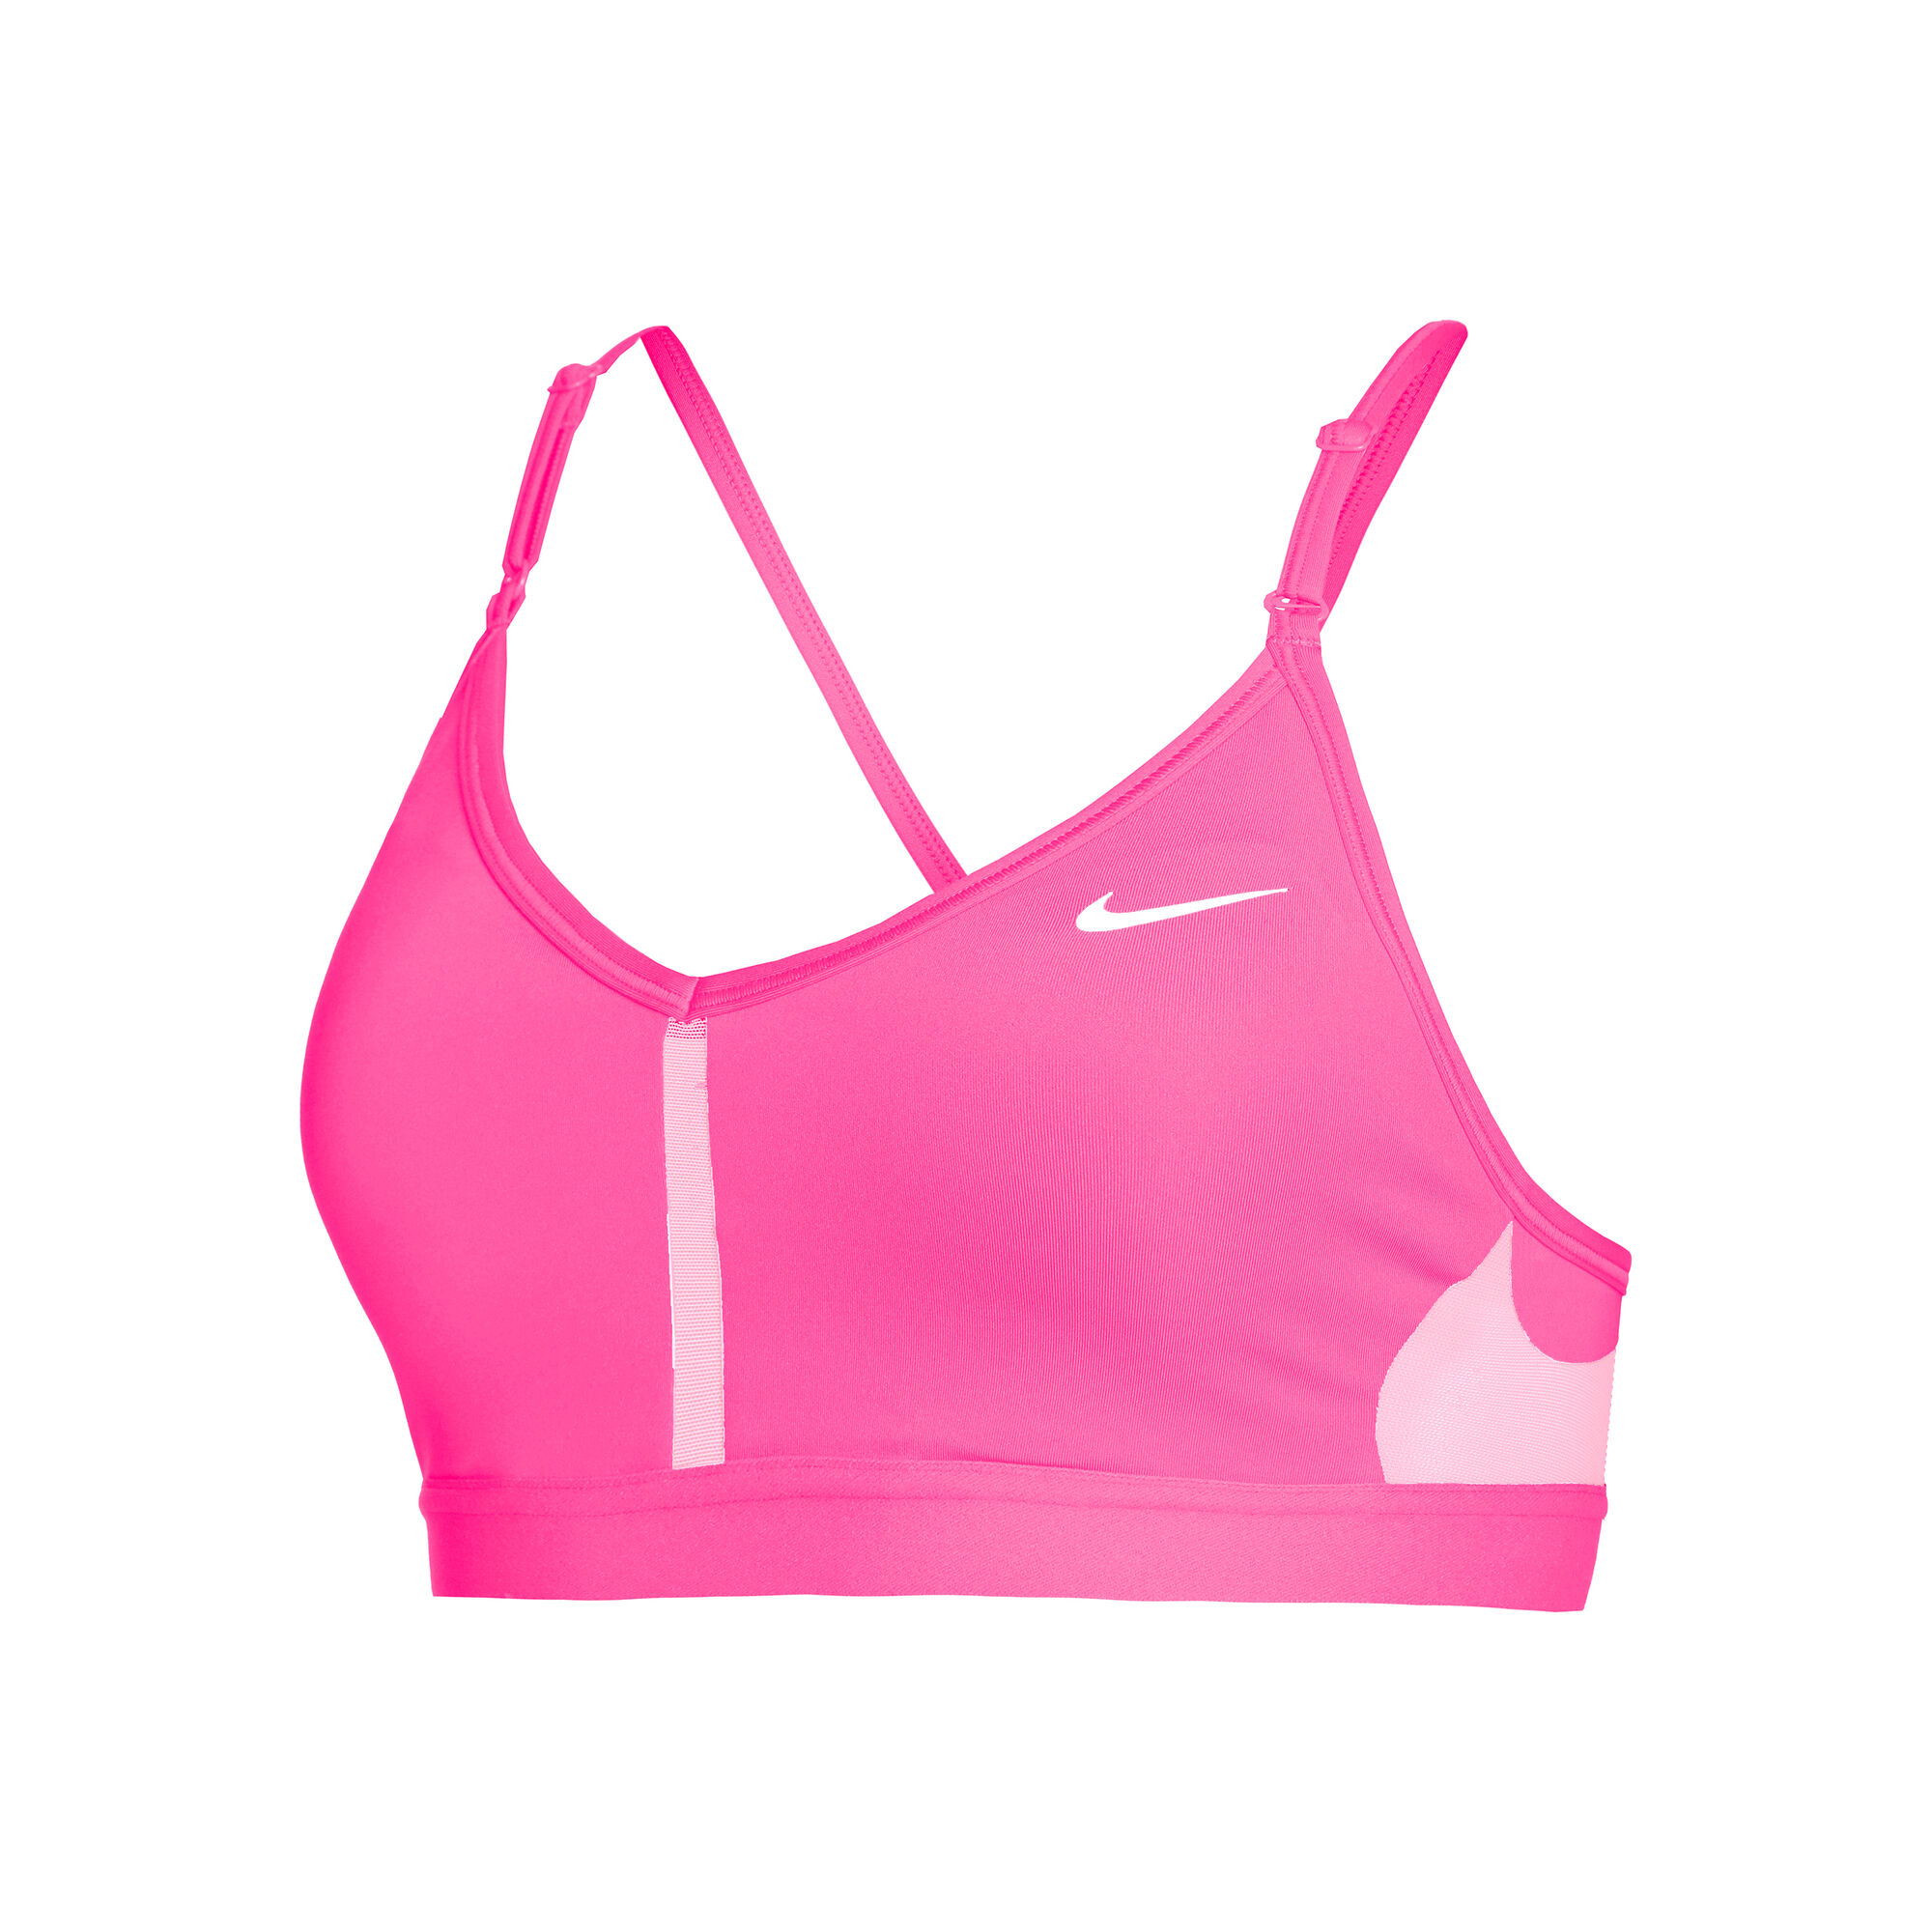 Nike Performance INDY BANDEAU BRA - Sport-BH mit leichter Stützkraft -  active fuchsia/cosmic fuchsia/ocean bliss/pink 